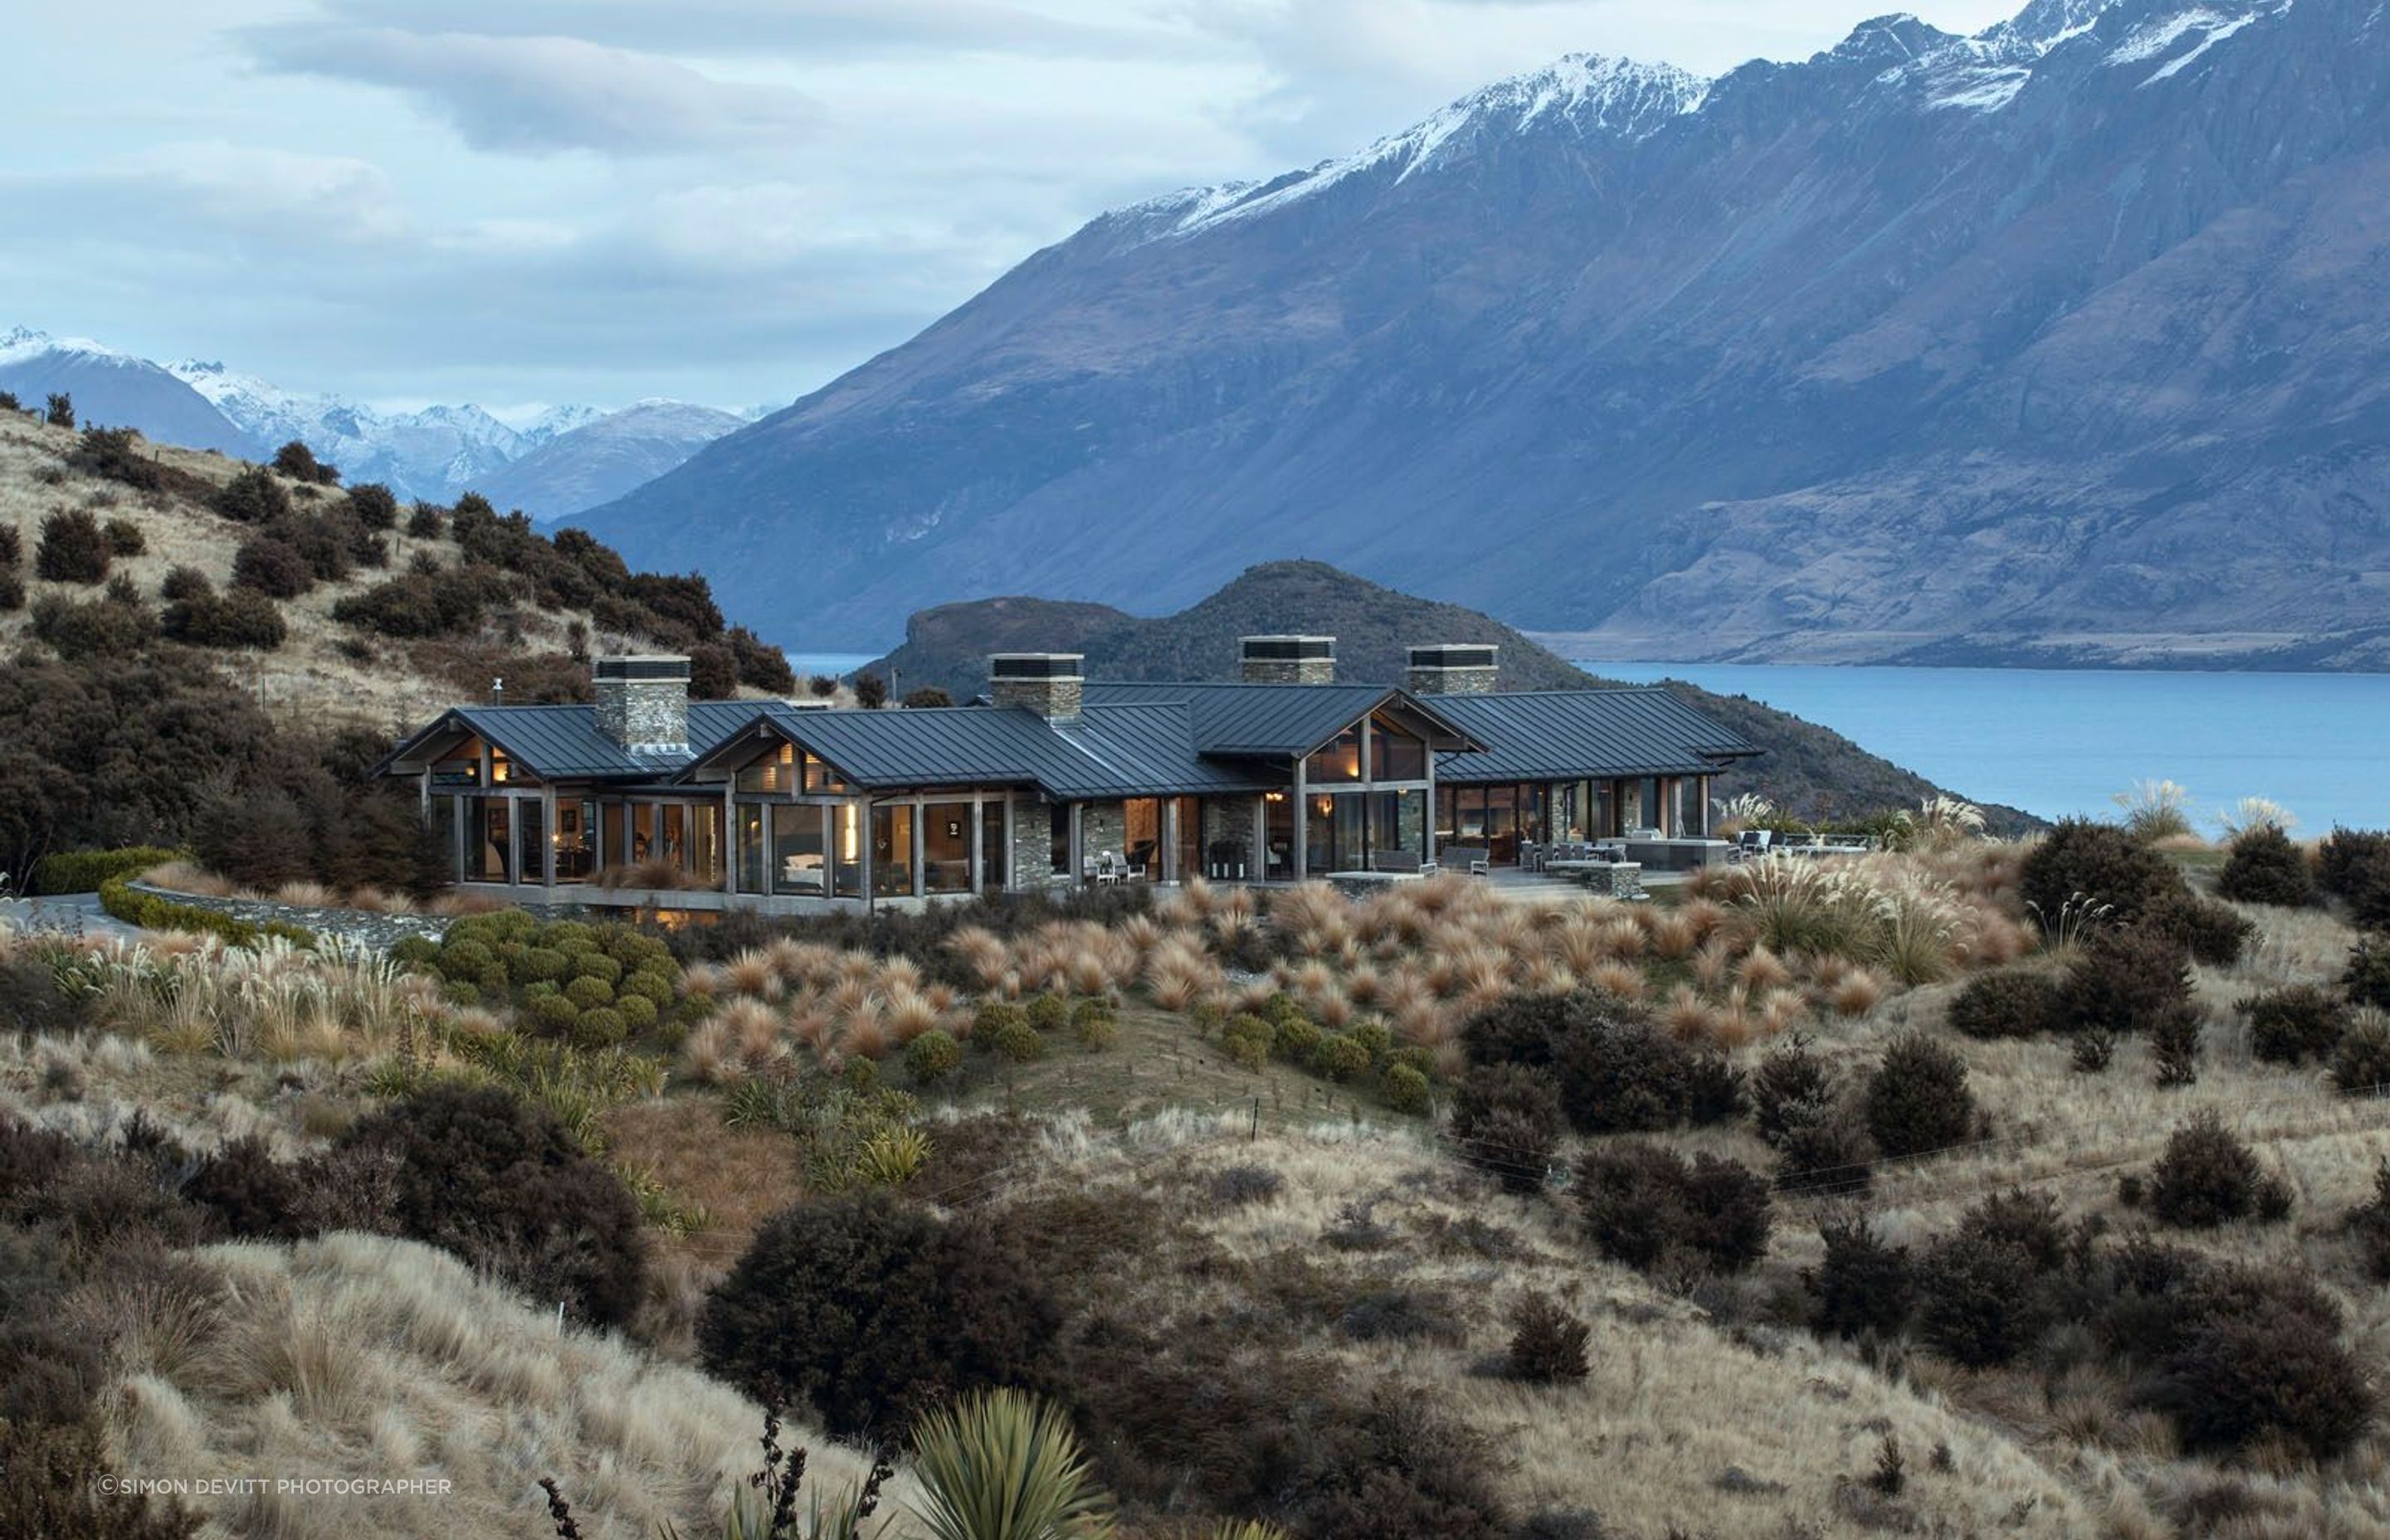 Wyuna House, Wyuna Reserve, South Island, New Zealand, designed by Mason and Wales Architects.